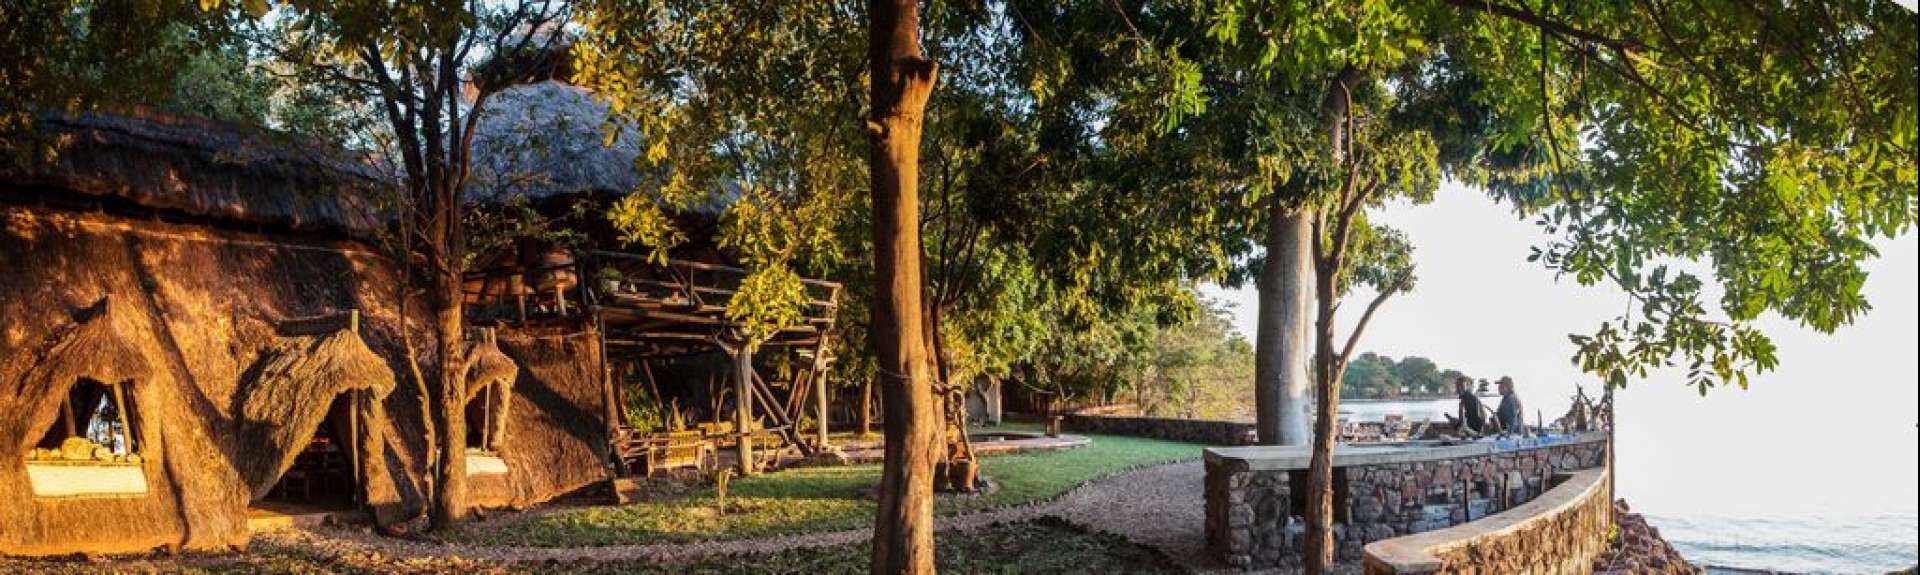 Musango Safari Camp in Zimbabwe